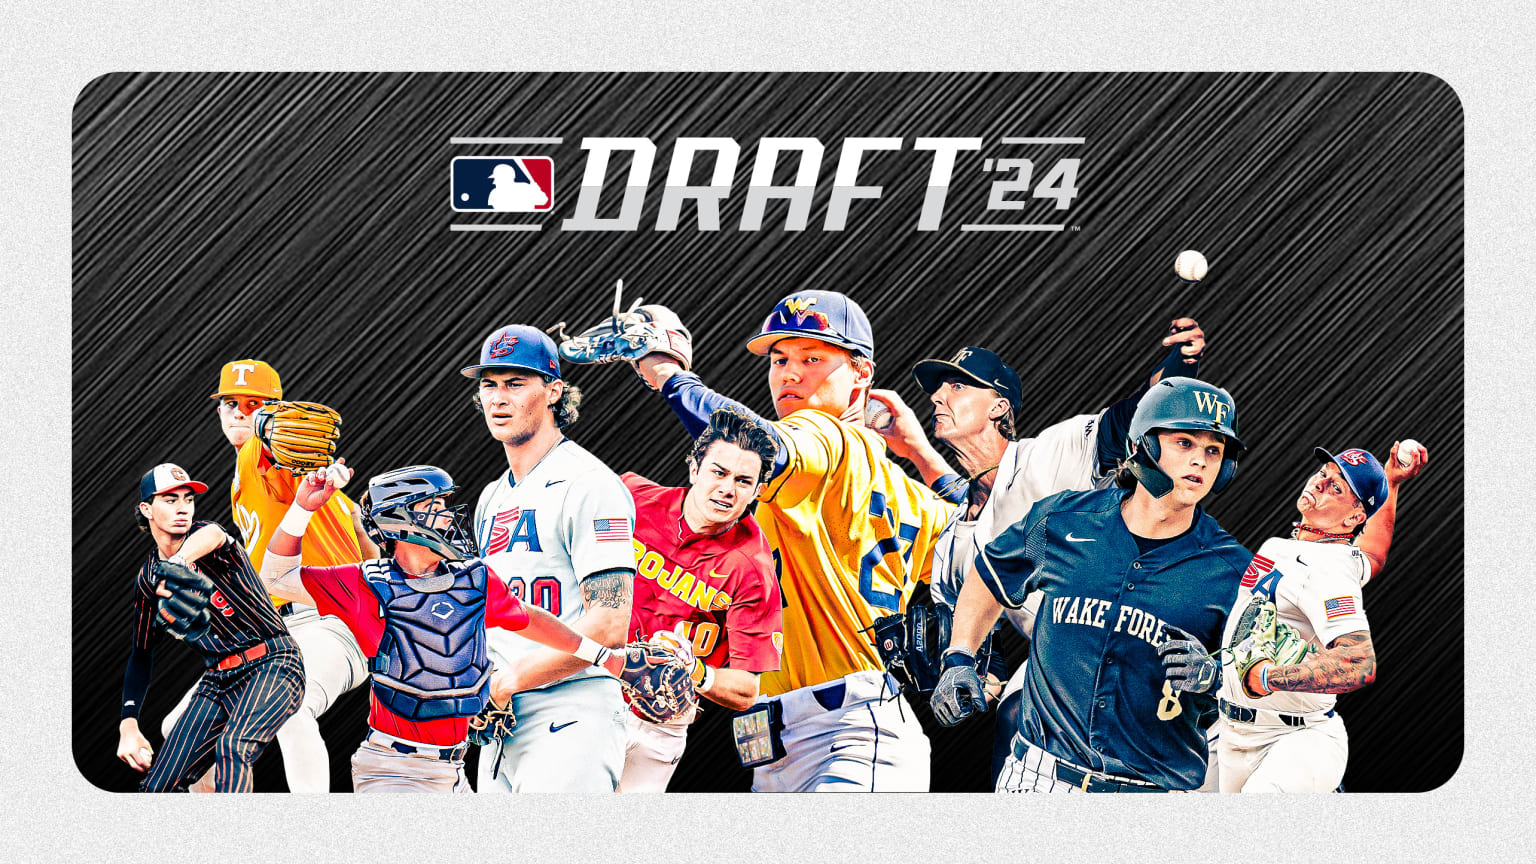 A photo illustration of 9 Draft prospects